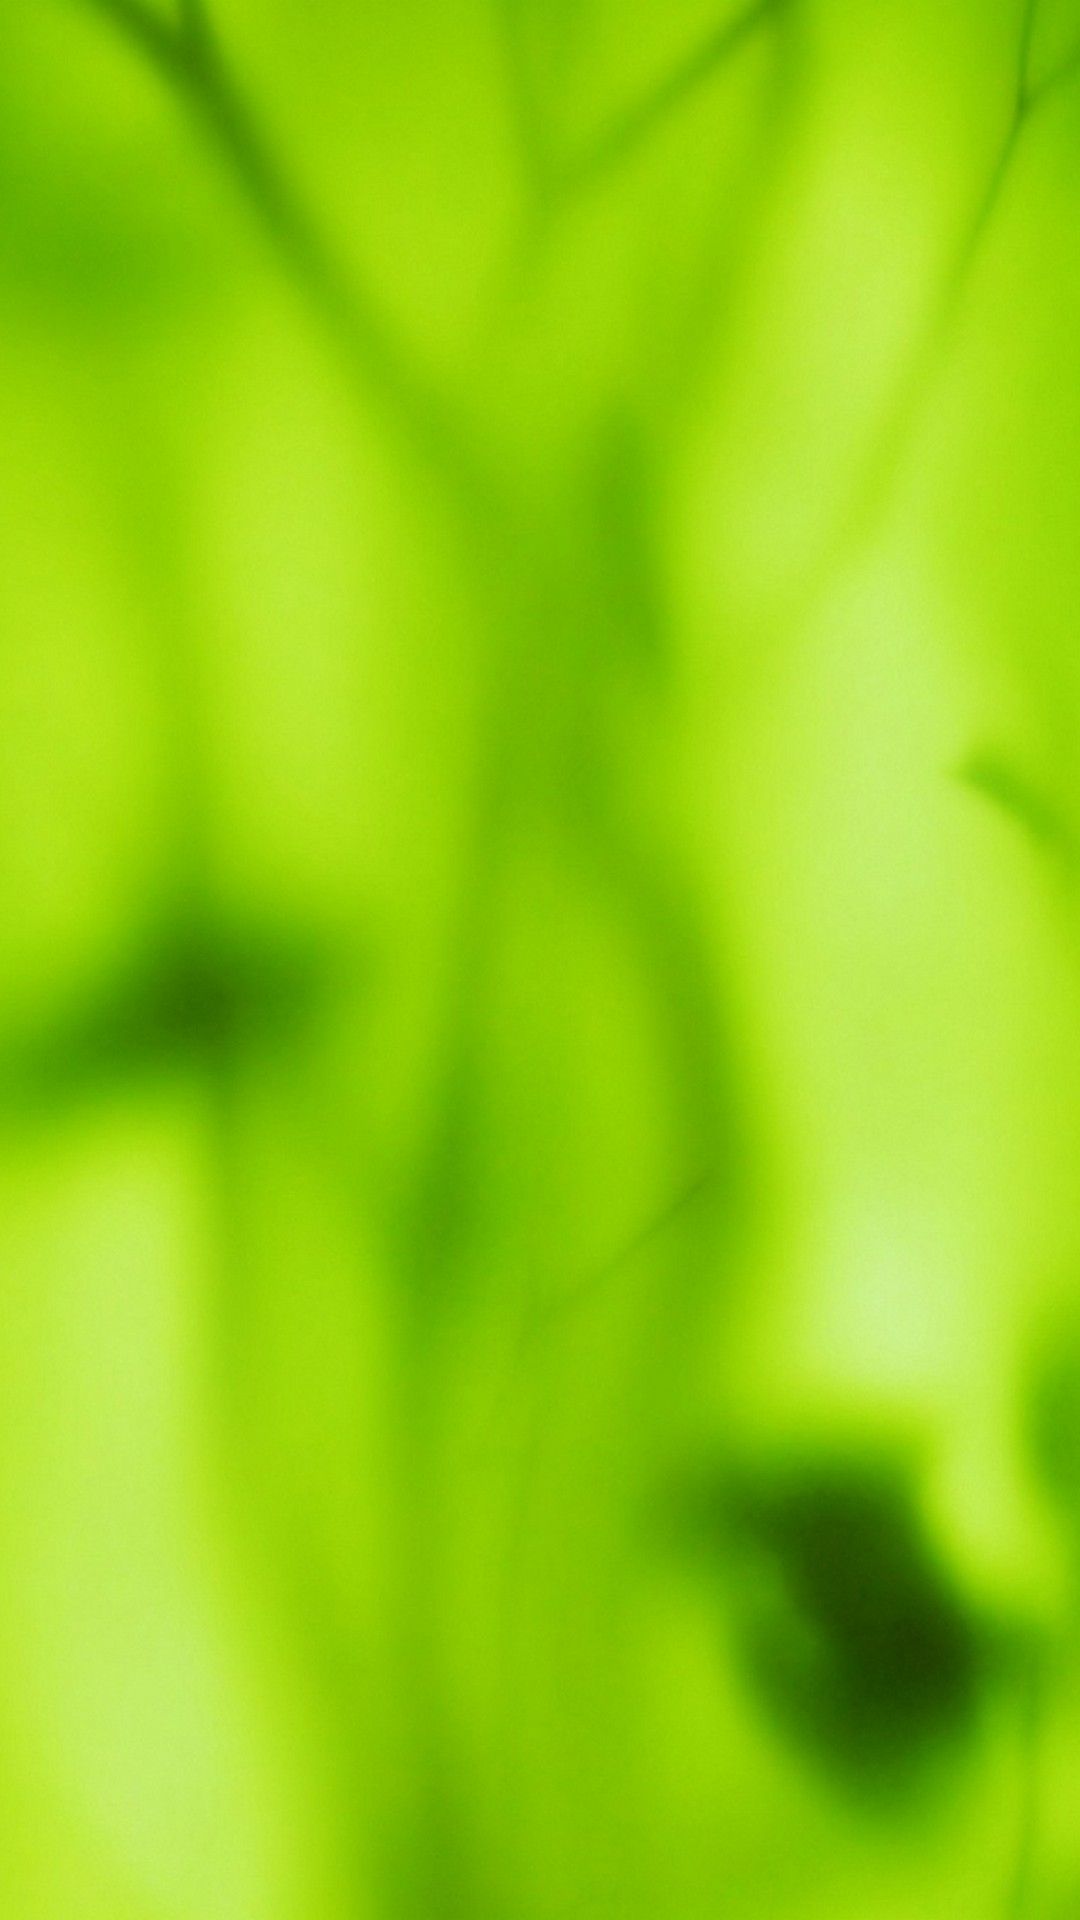 Green Color Mobile Wallpaper HD posted .cutewallpaper.org